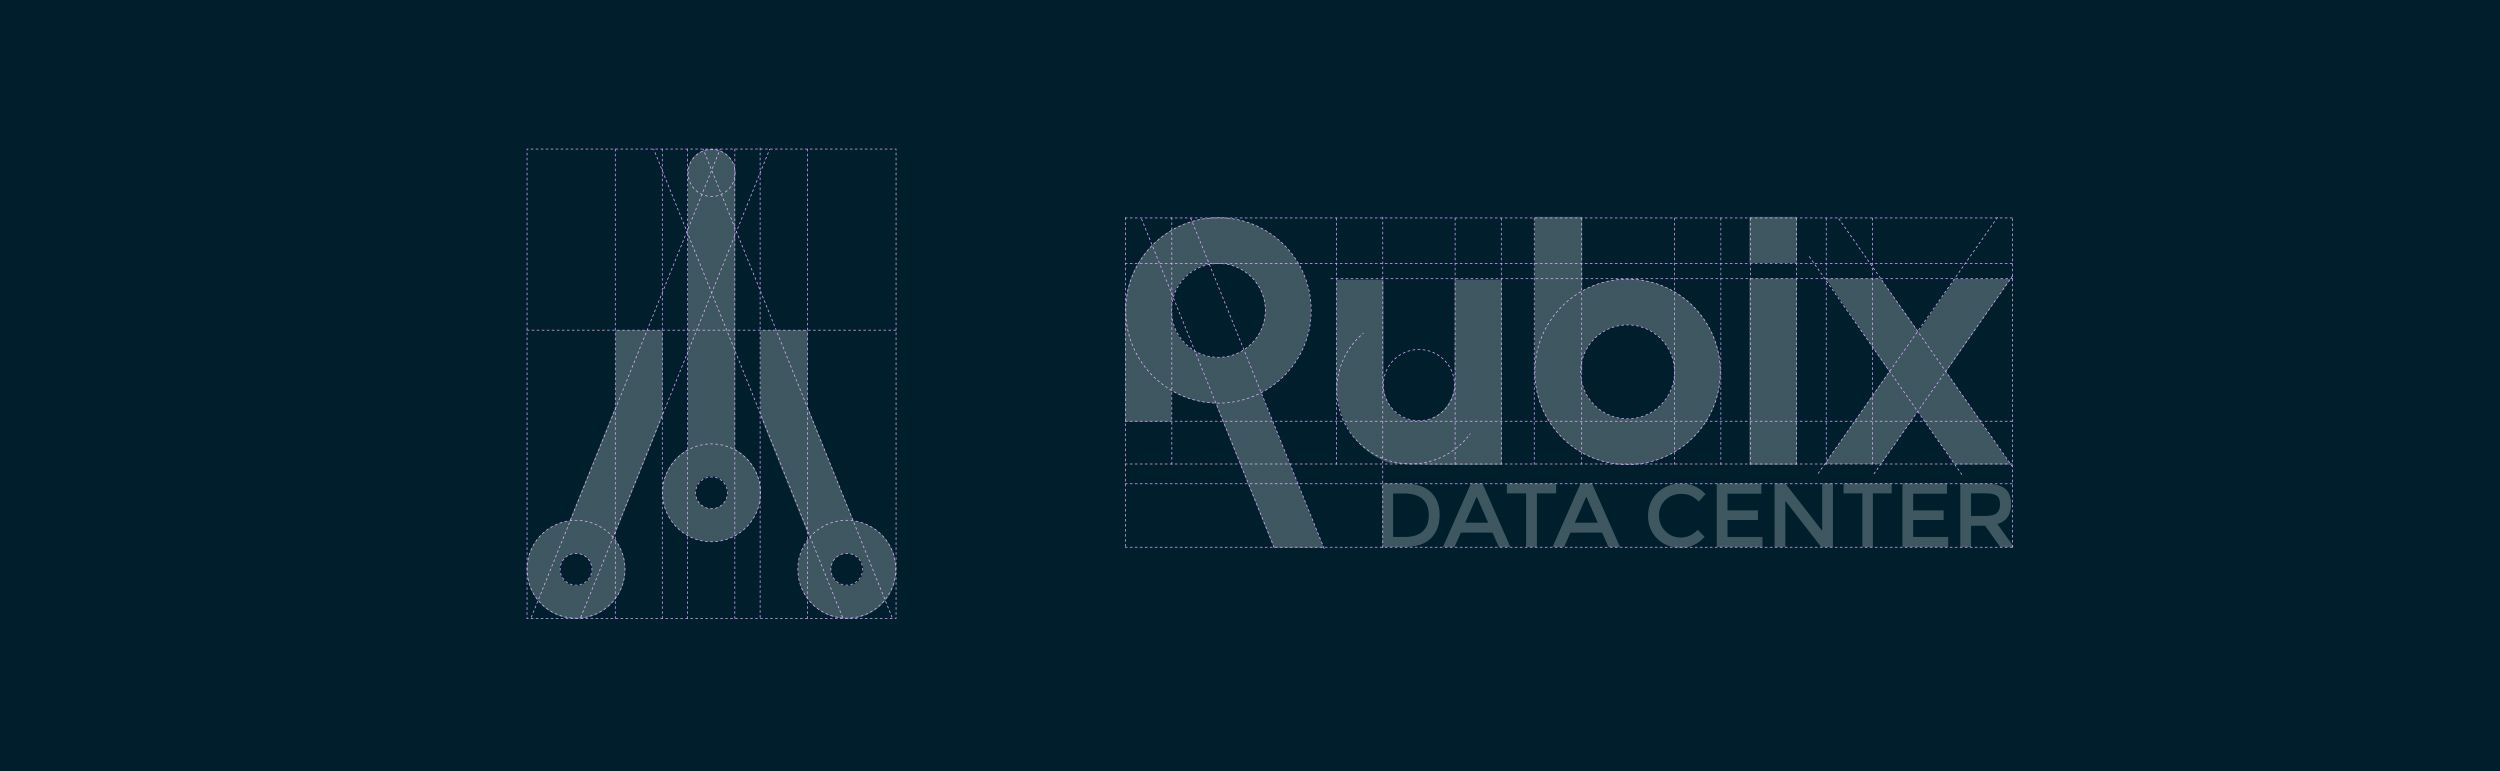 Rubix Data Center Construction du logo